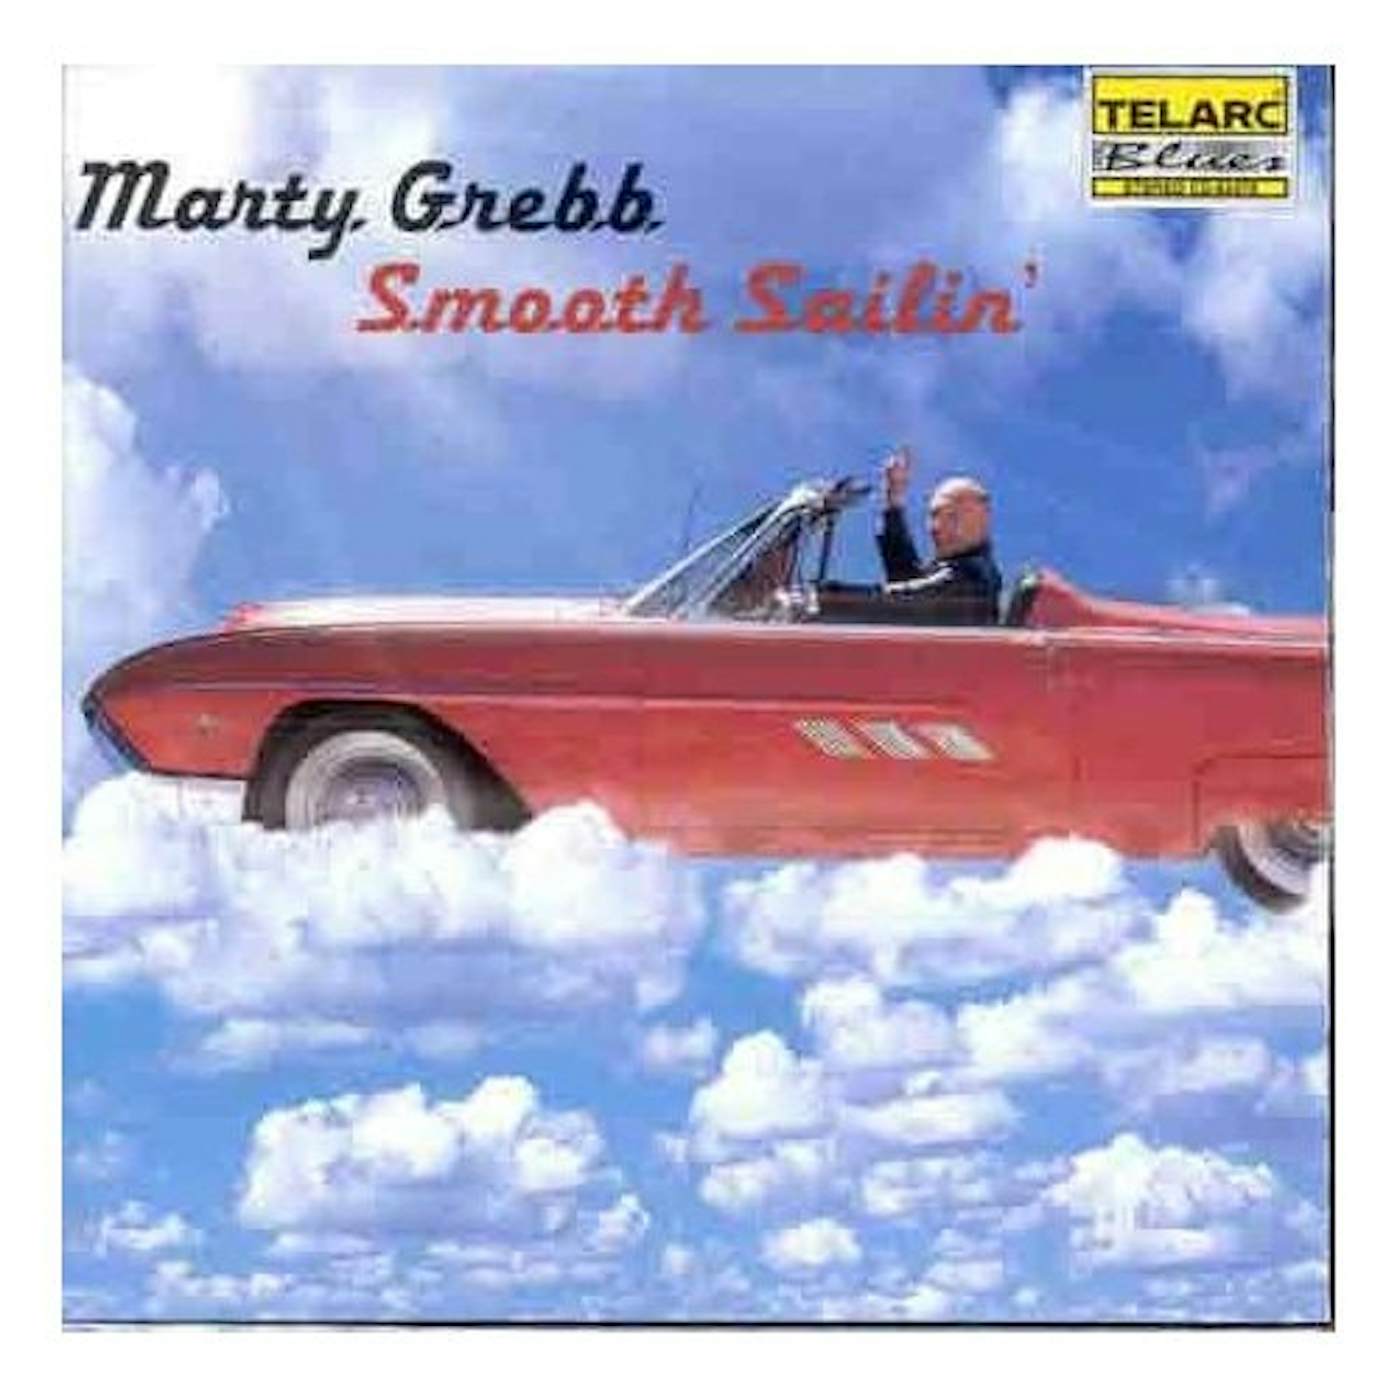 Marty Grebb SMOOTH SAILIN CD